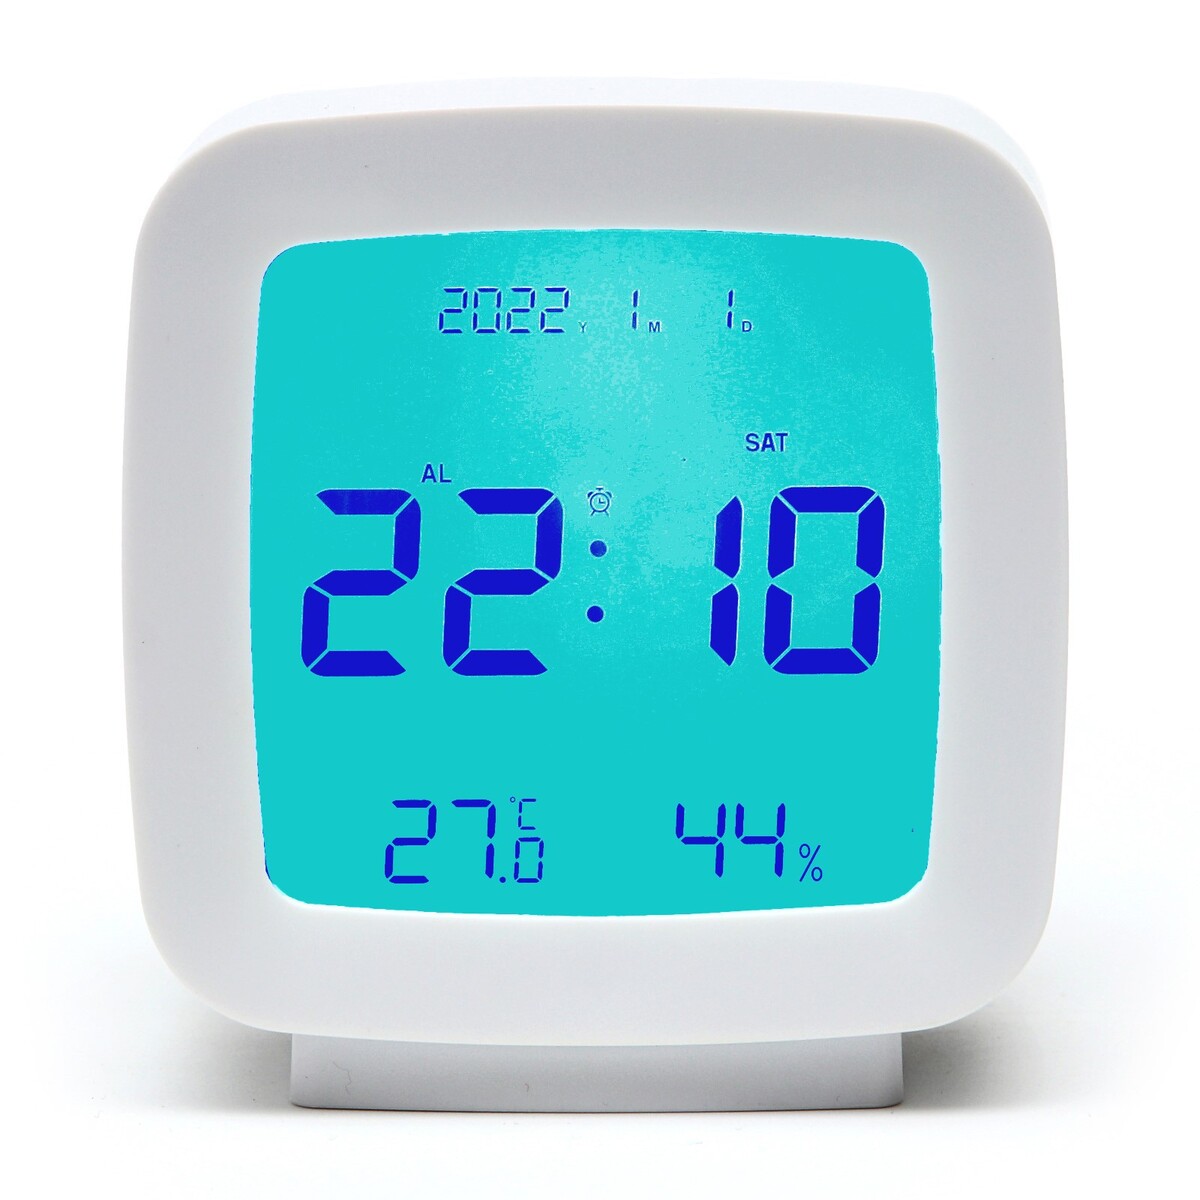 Часы - будильник электронные настольные: термометр, календарь, гигрометр, 7.8 х 8.3 см часы будильник электронные настольные календарь термометр гигрометр 15 5 х 9 5см 3ааа